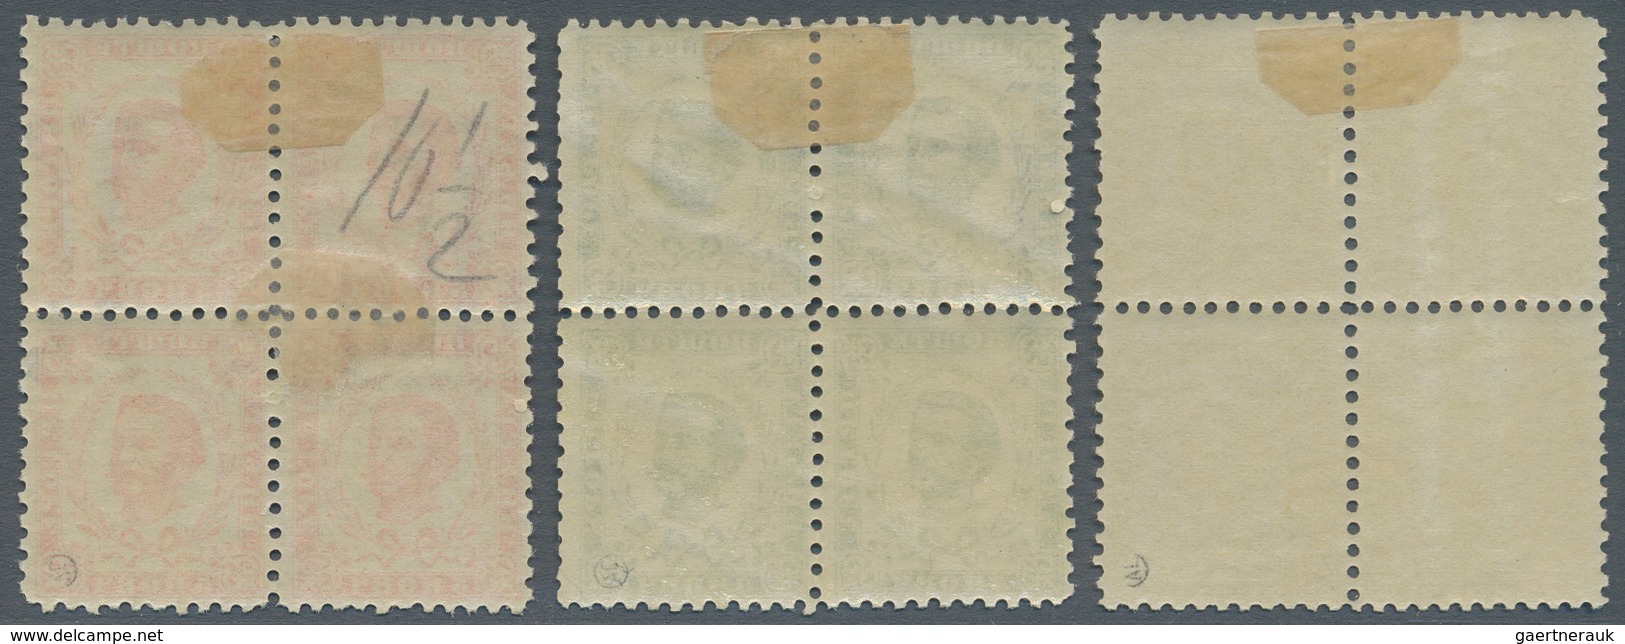 Montenegro: 1890. Prince Nicholas. Third Printing. Set of seven, Perf 10½, stamps 2-2½ mm apart, thi